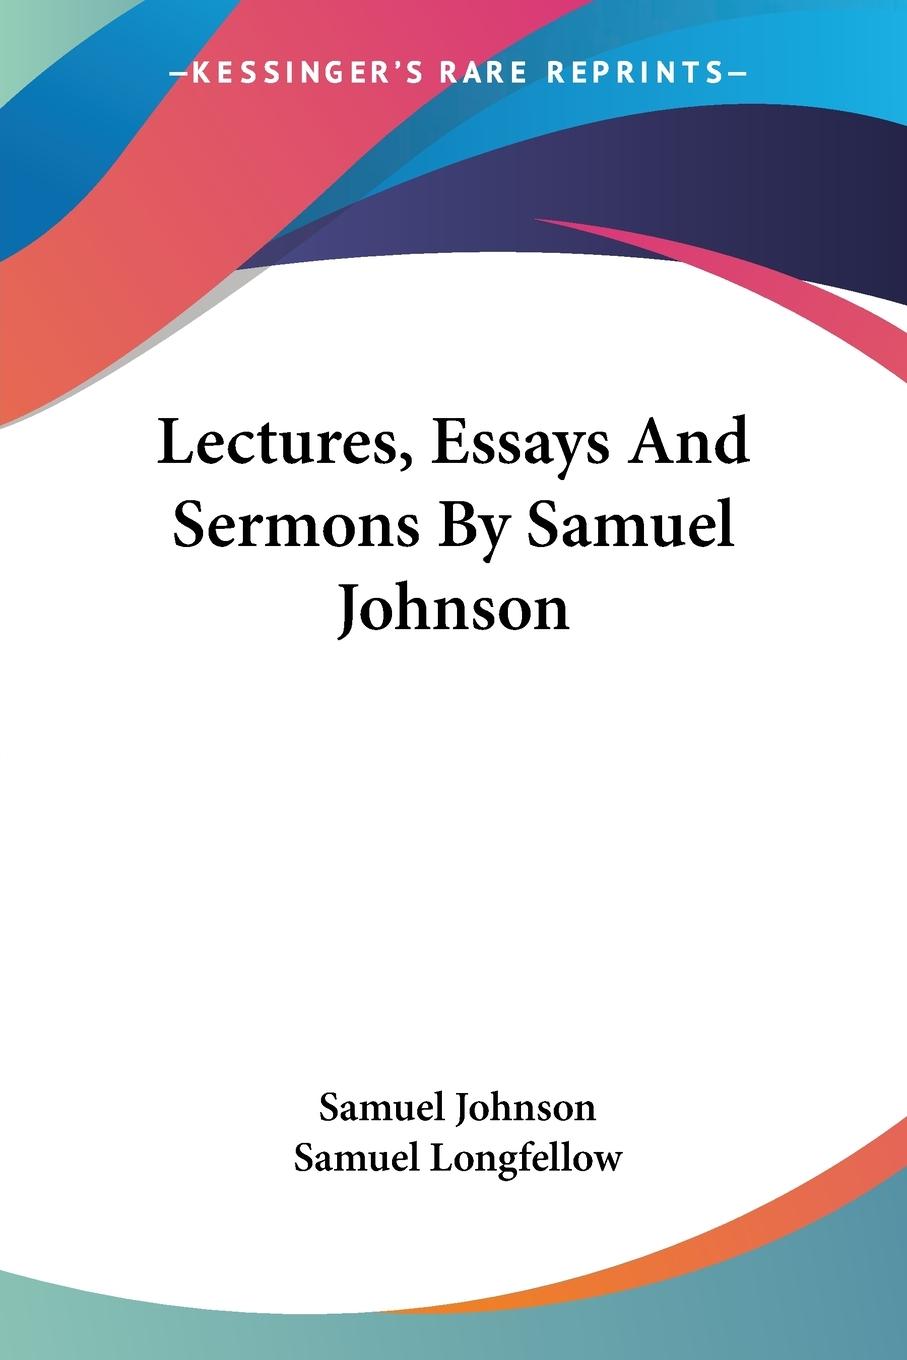 Lectures, Essays And Sermons By Samuel Johnson - Johnson, Samuel Longfellow, Samuel